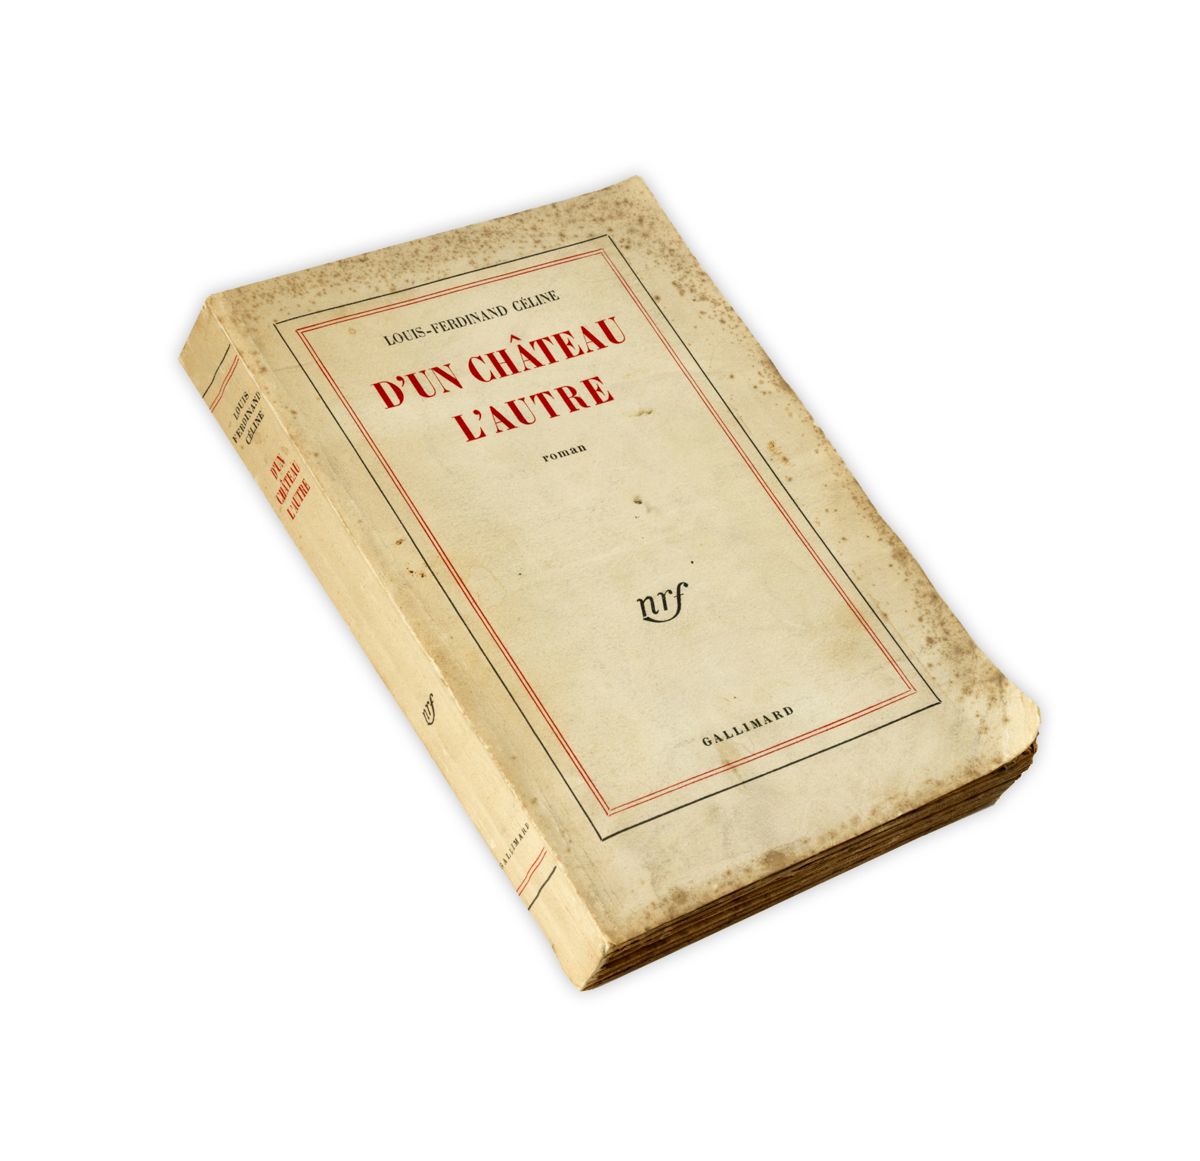 Null CELINE (Louis-Ferdinand). D'un château l'autre.1卷，8开本，平装。巴黎Gallimard 1957年。&hellip;